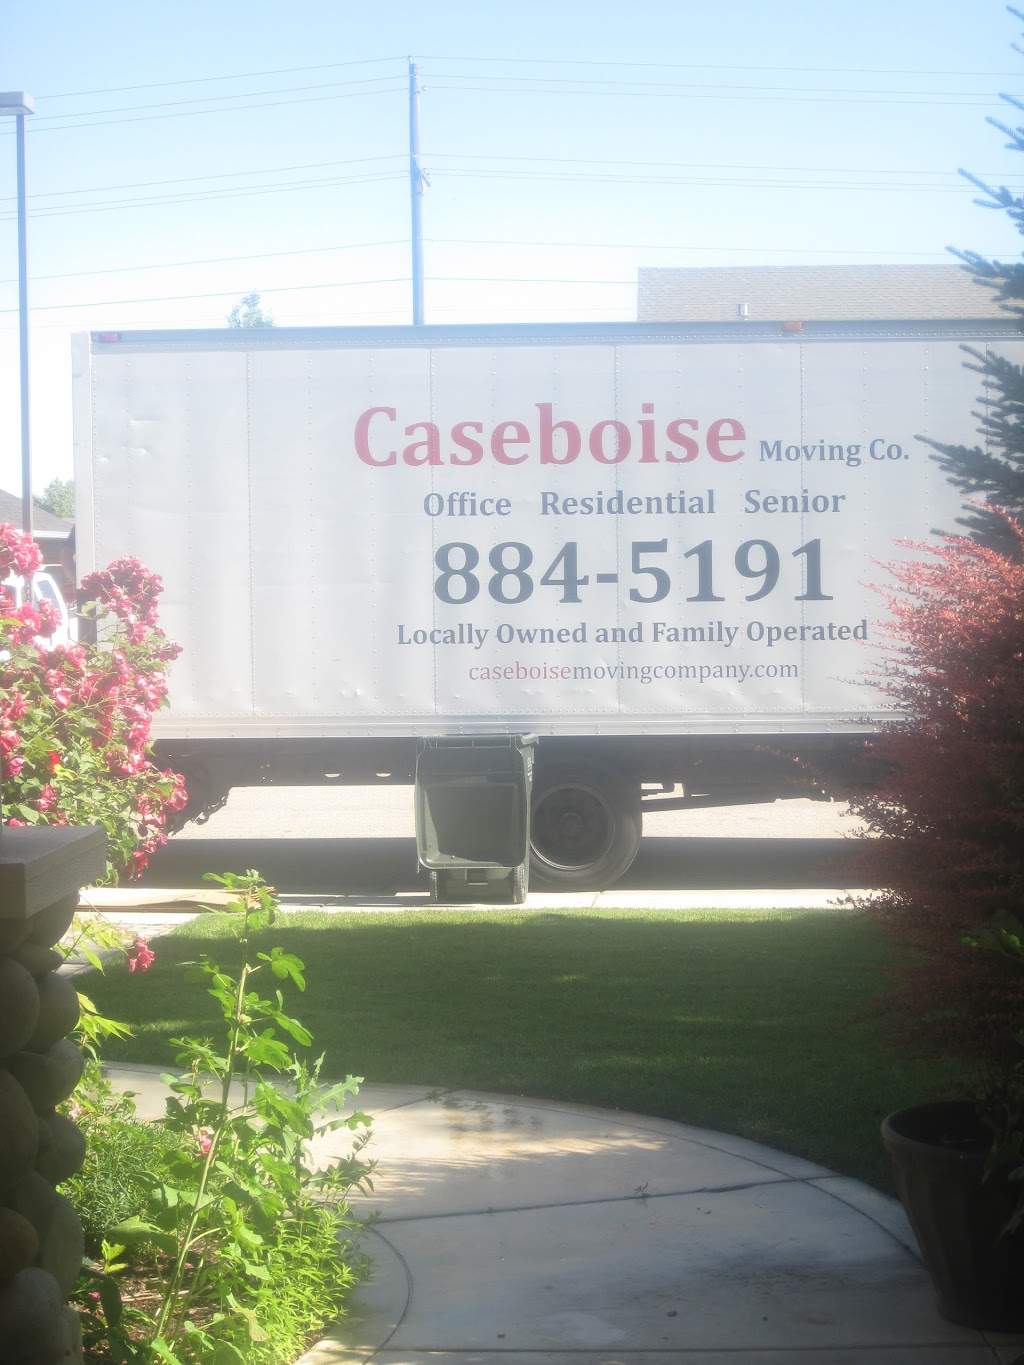 Caseboise Moving | 1220 N Cole Rd, Boise, ID 83704, USA | Phone: (208) 884-5191